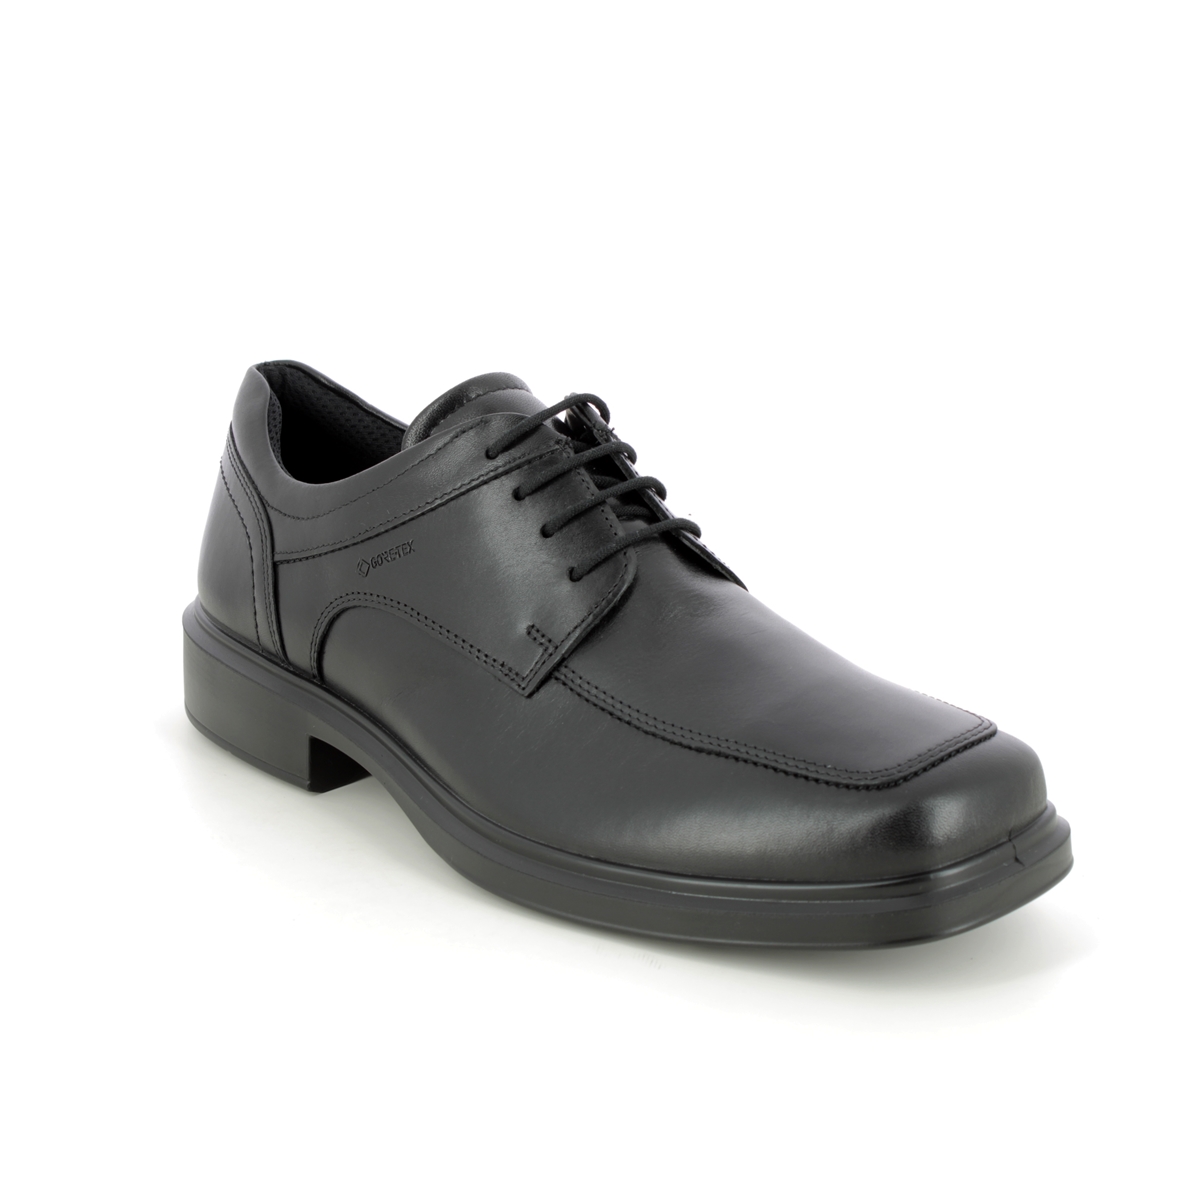 Ecco Helsinki 2 Gtx Black Leather Mens Formal Shoes 500204-01001 In Size 41 In Plain Black Leather